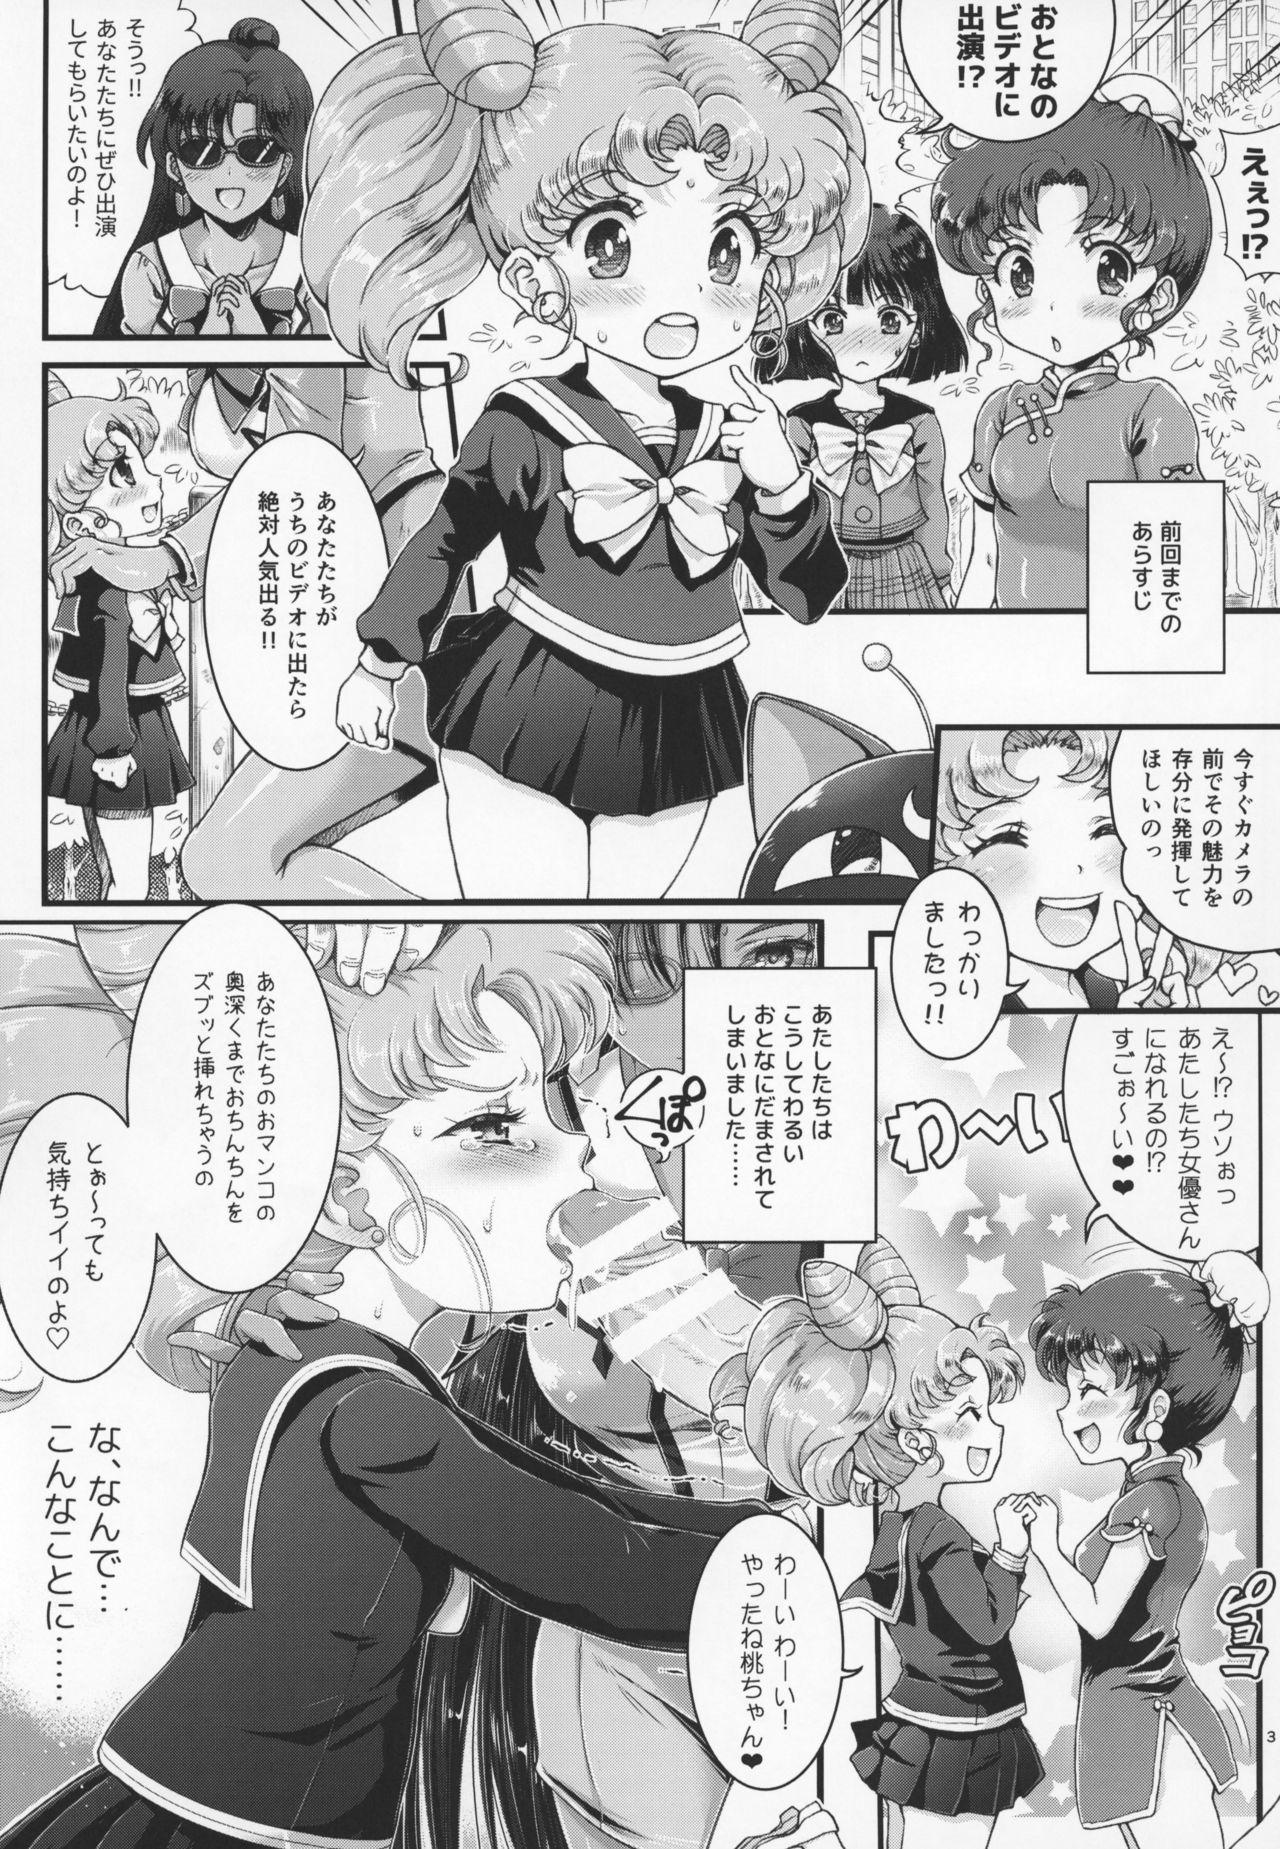 Sailor AV Kikaku 1